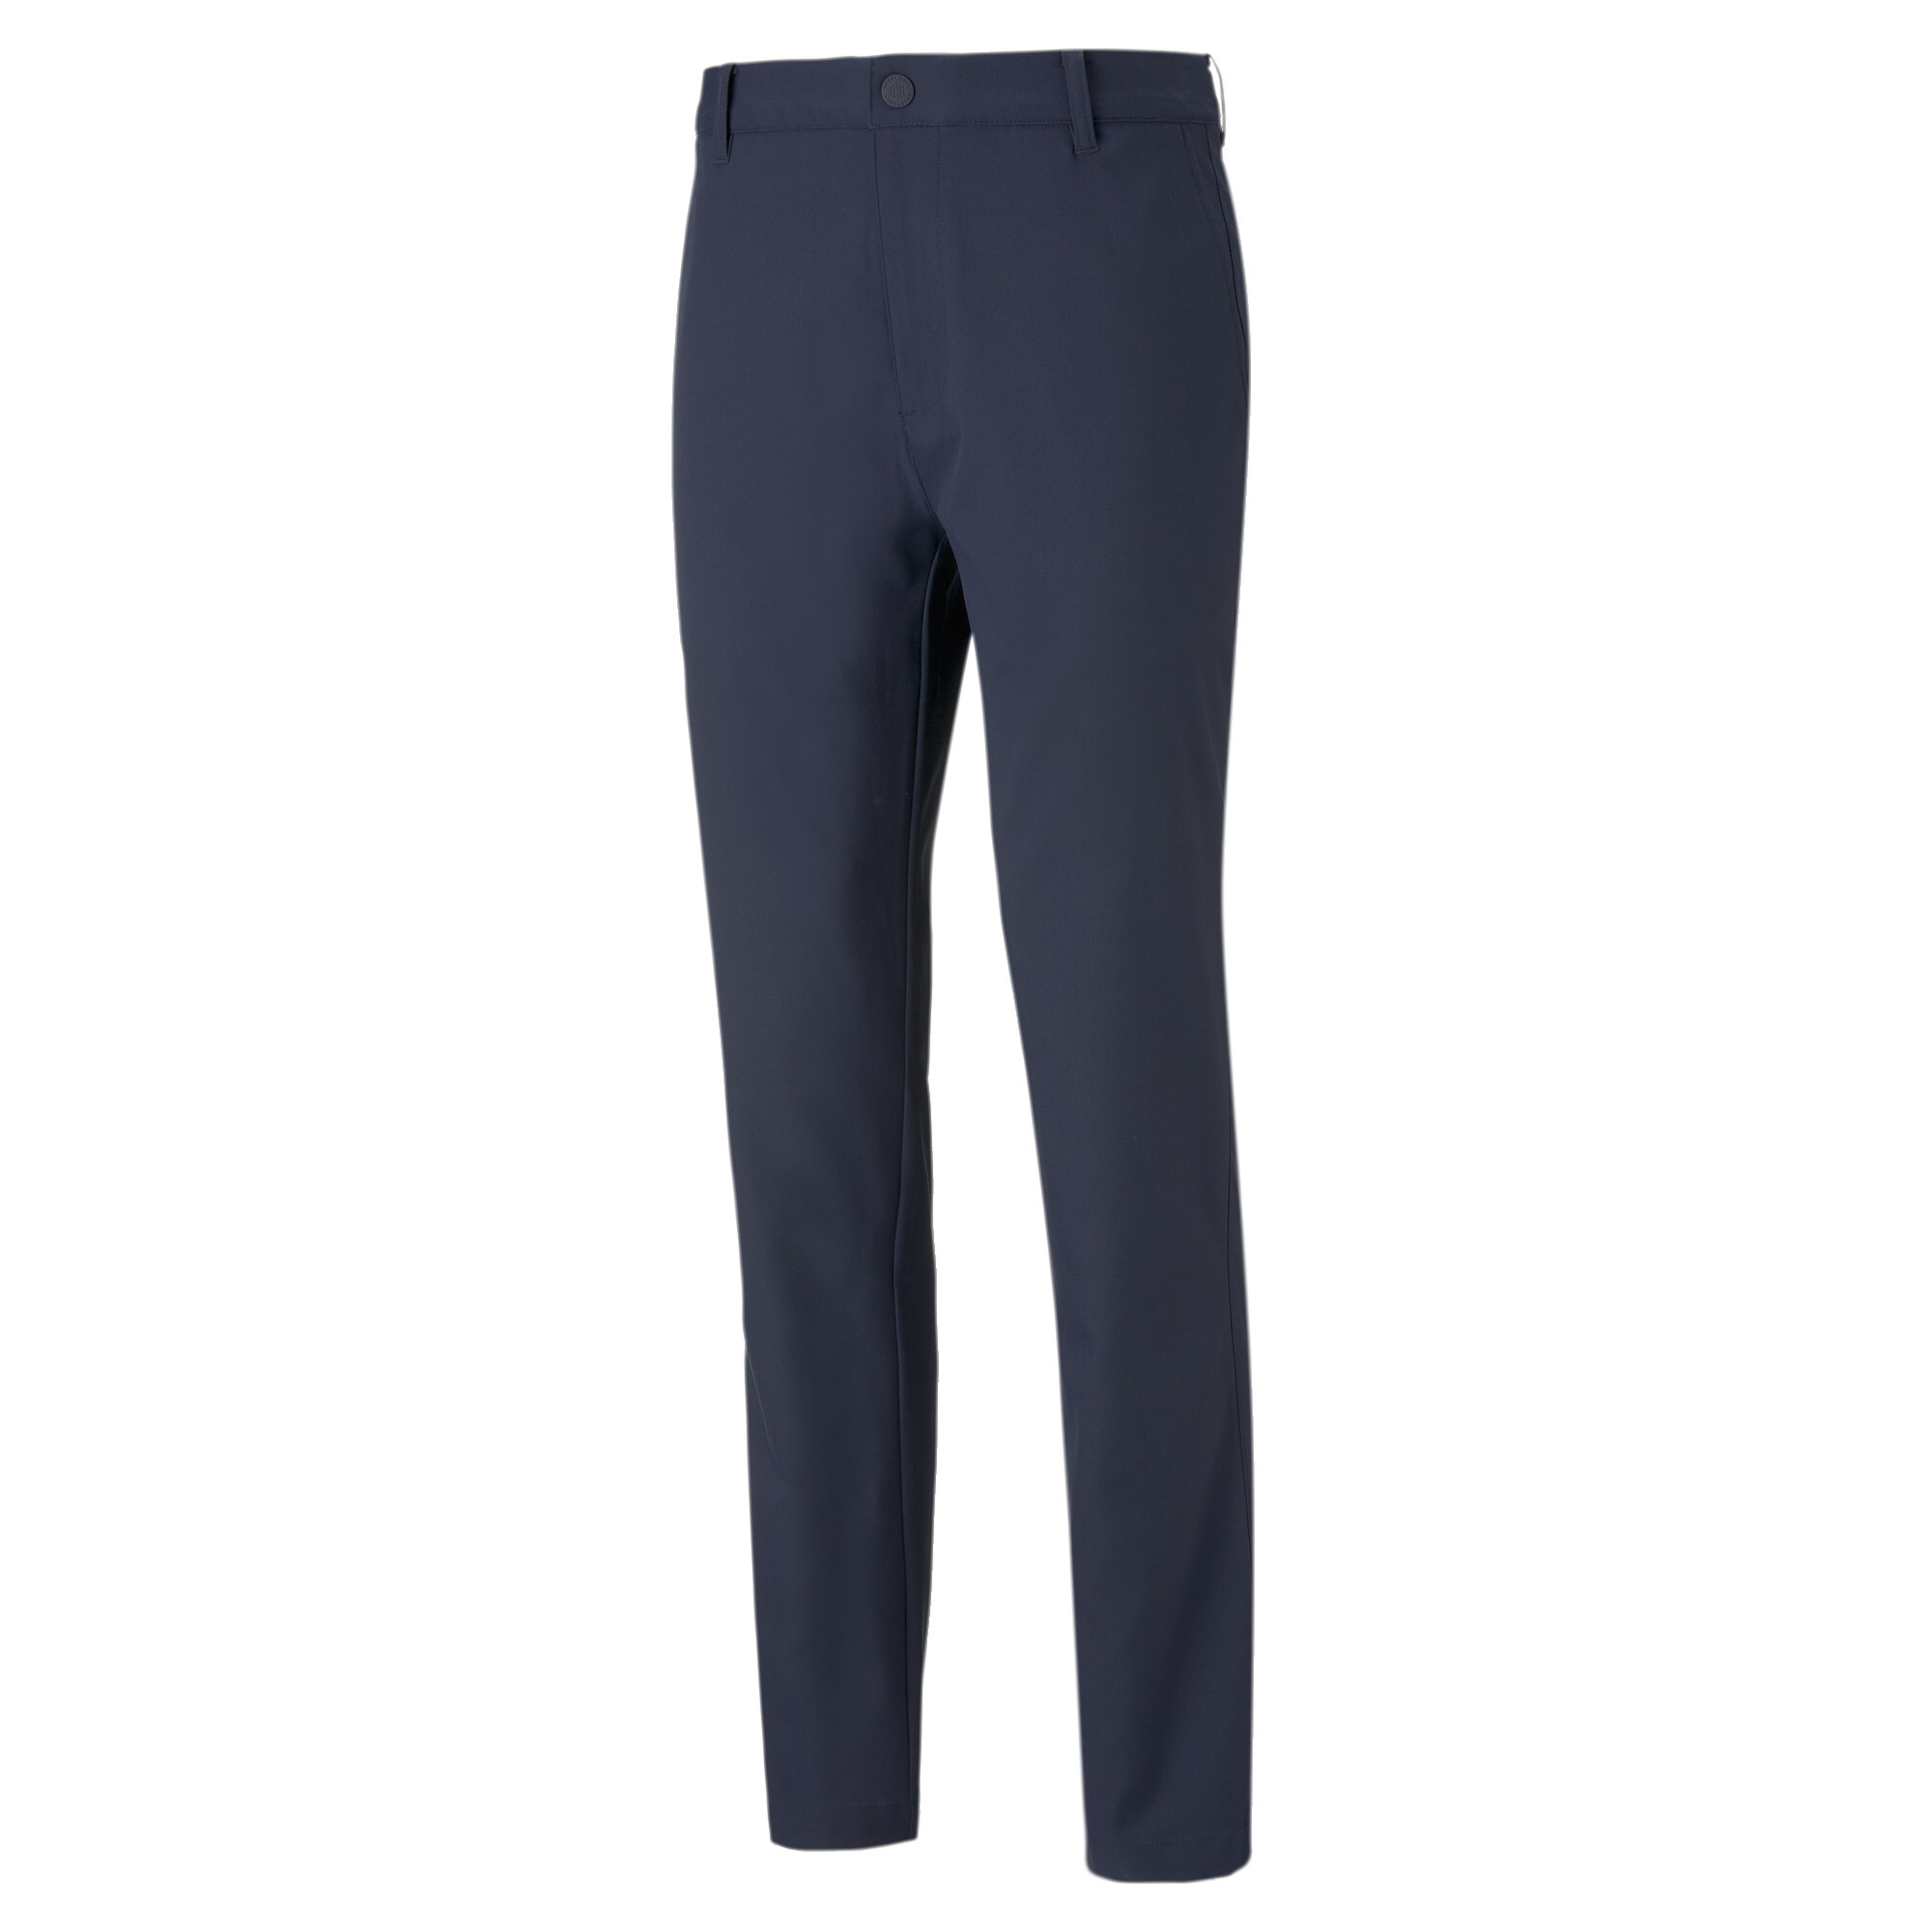 Men's Puma Dealer Golf Pants, Blue, Size 32/30, Clothing